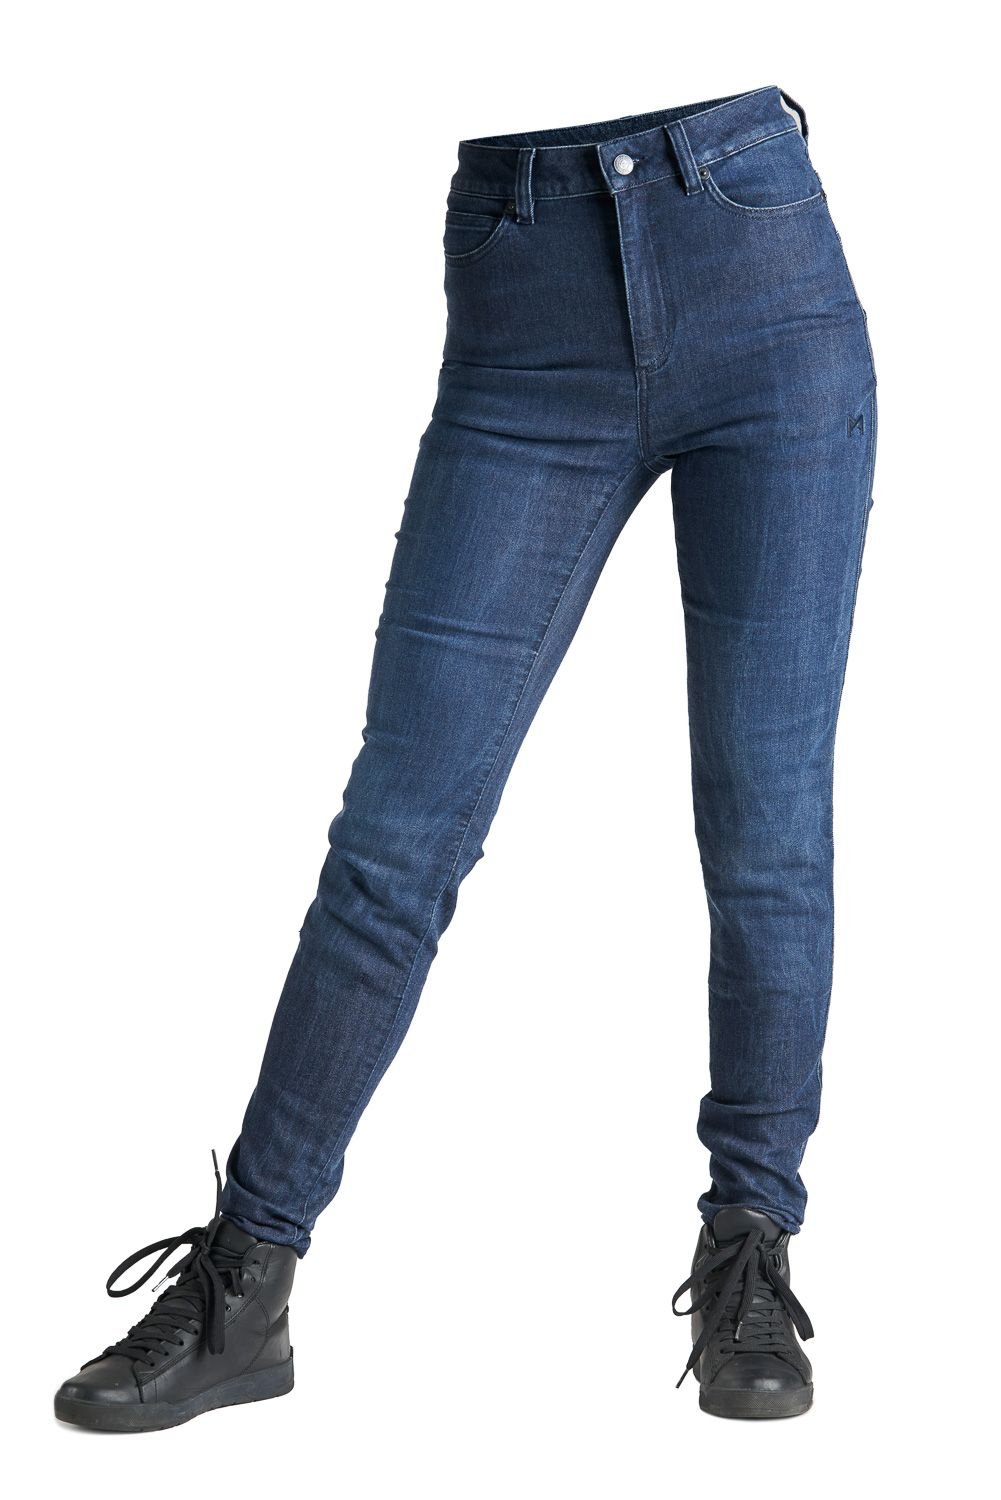 Image of Pando Moto Kusari Cor 02 Women Motorcycle Jeans Skinny-Fit Cordura Size W29/L30 ID 7851049504294